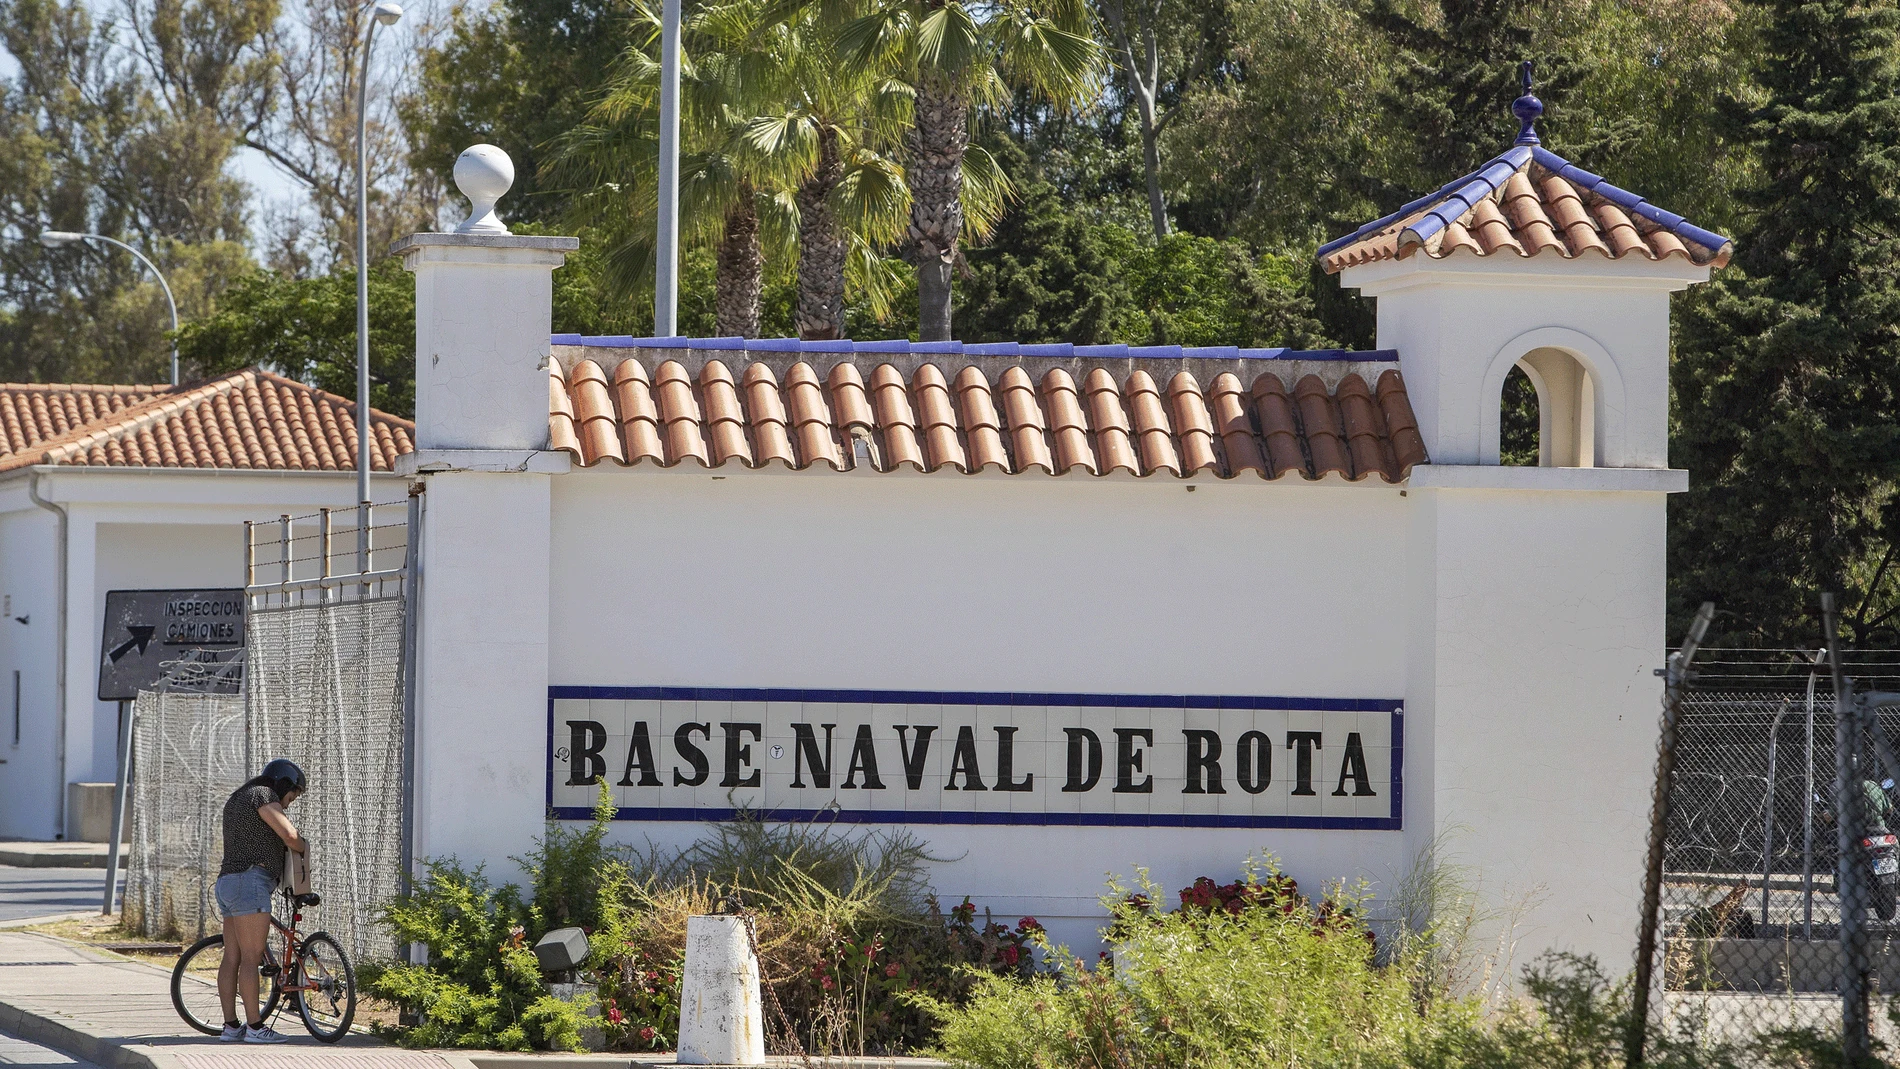 Base Naval de Rota